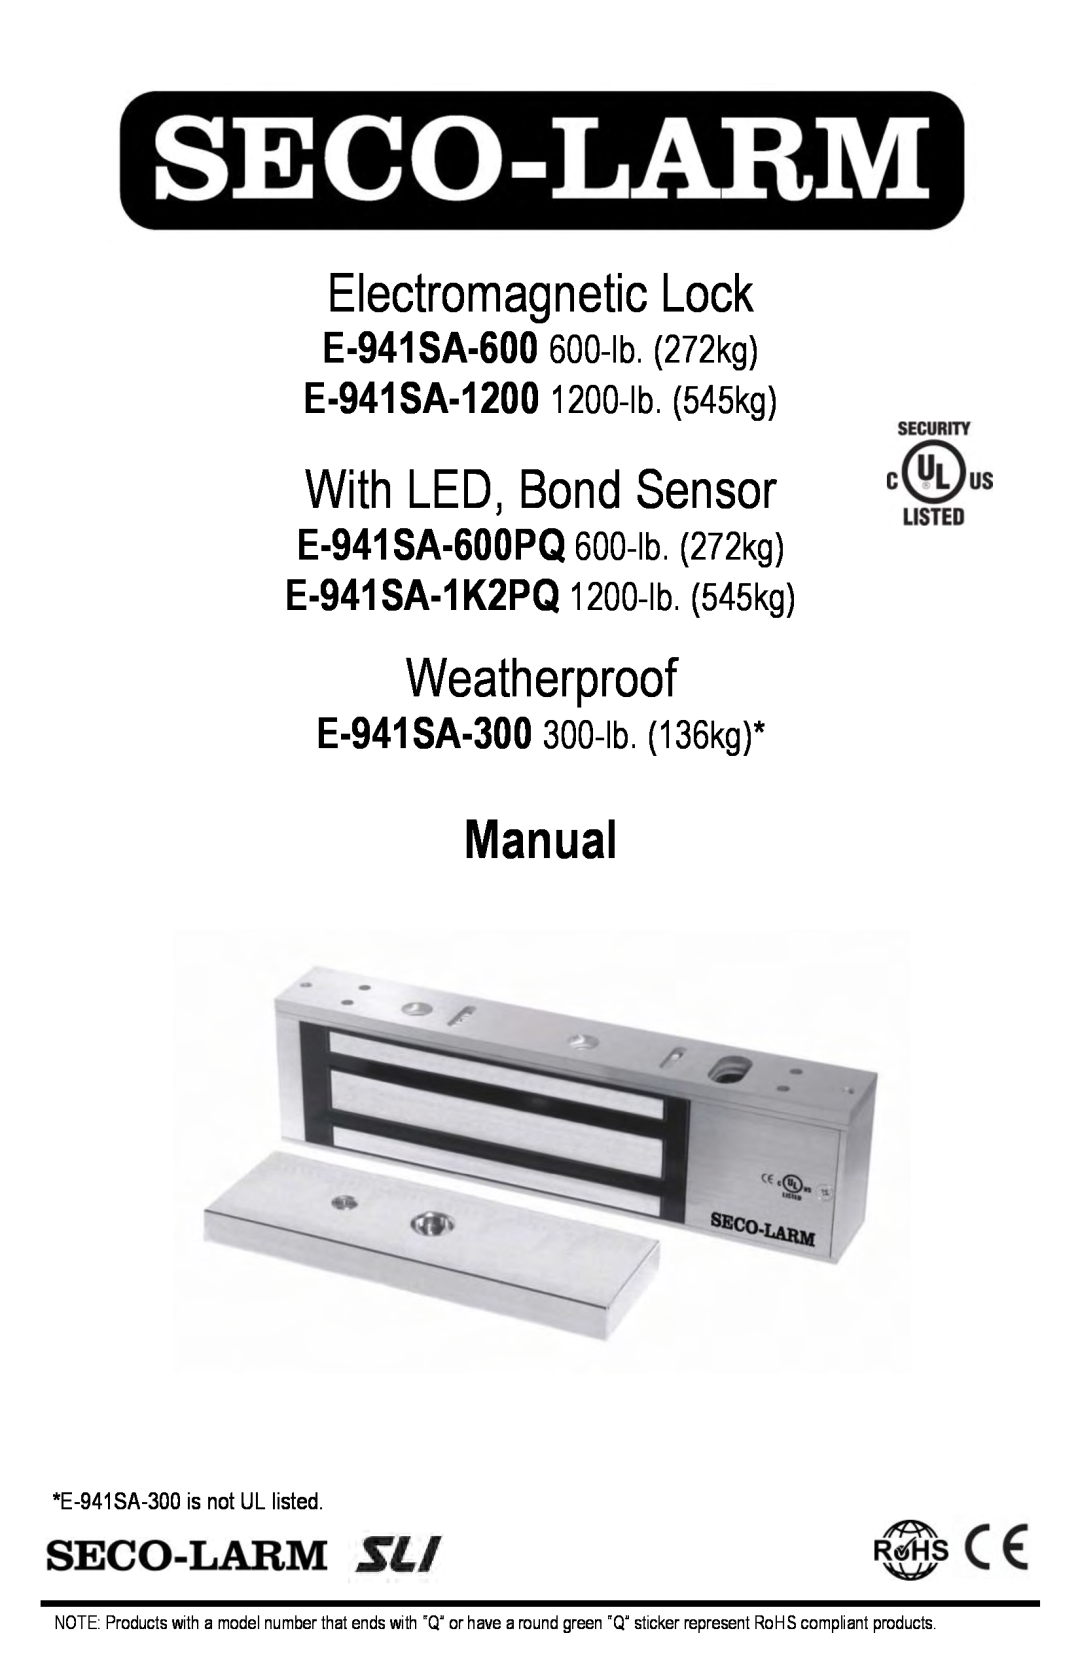 SECO-LARM USA E-941SA-1K2PQ, E-941SA-600PQ manual Electromagnetic Lock, With LED, Bond Sensor, Weatherproof, Manual 